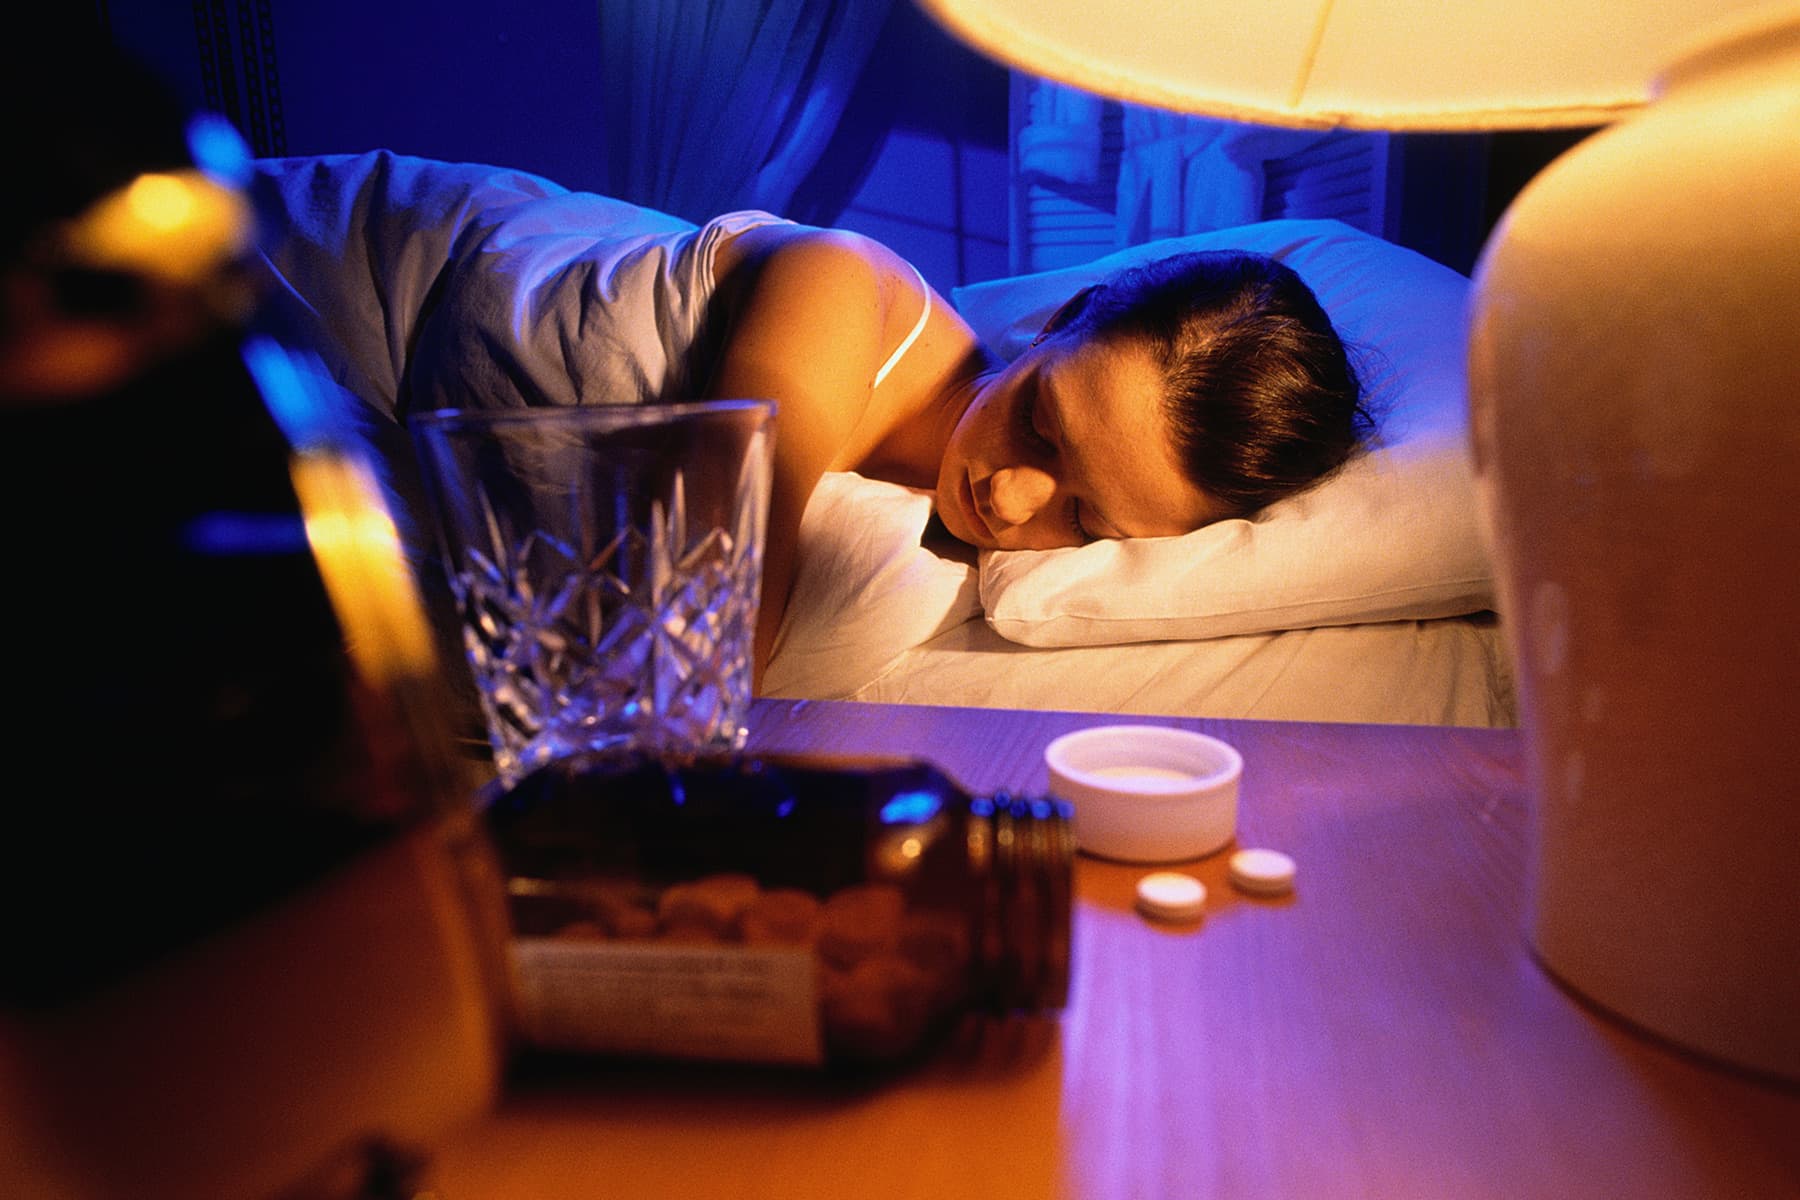 Deprived of Sleep, Many Turn to Melatonin Despite Risks